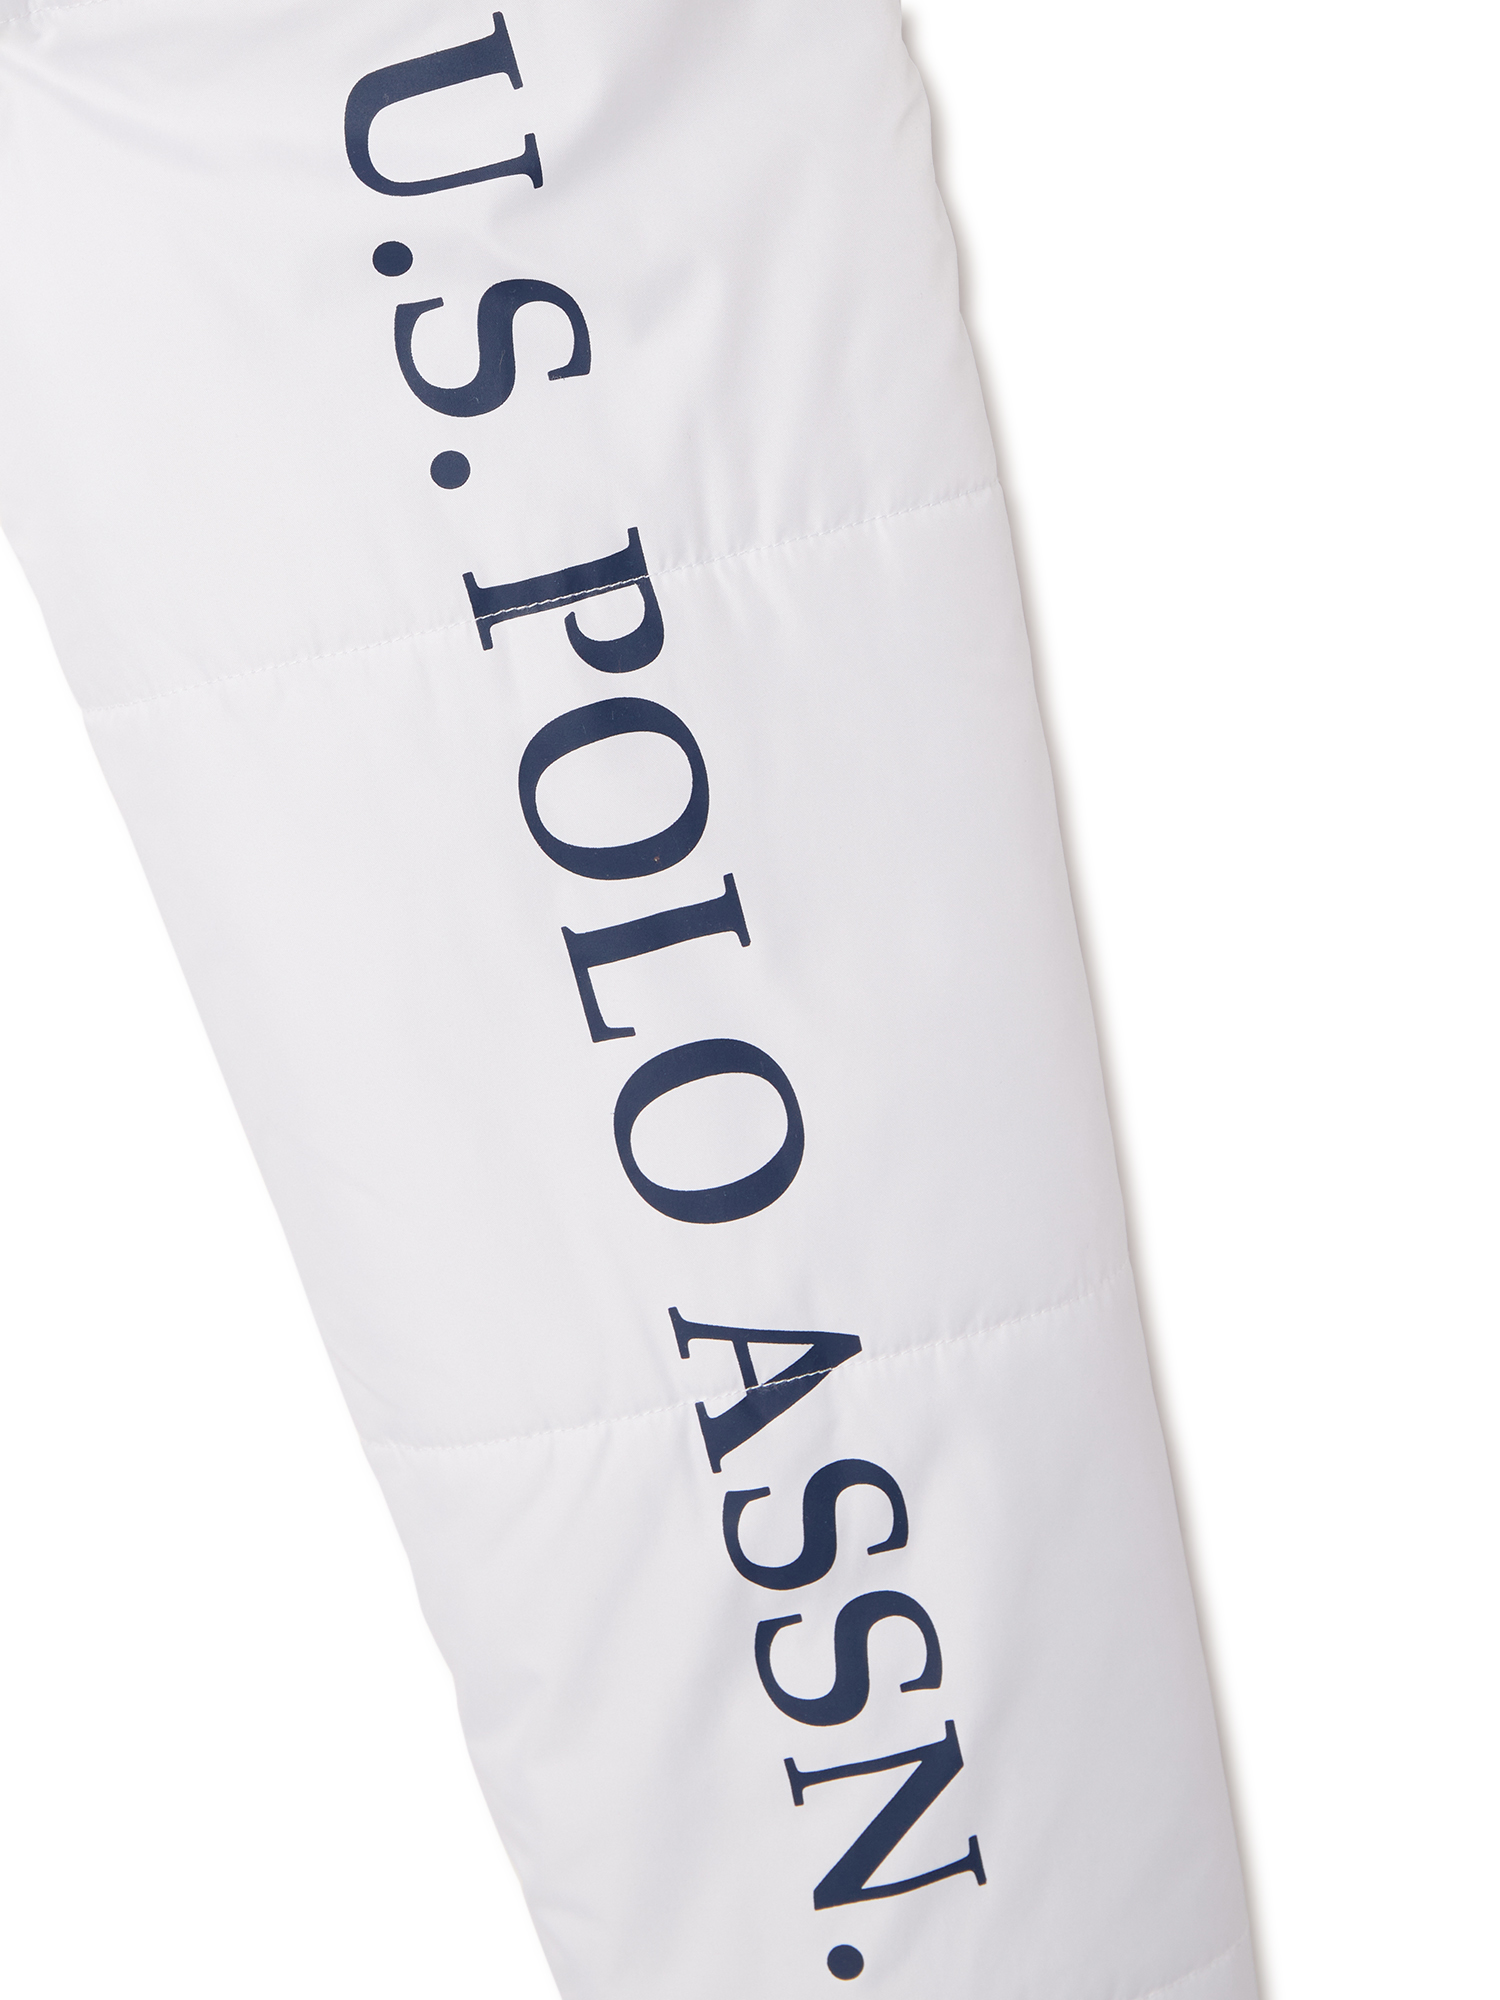 U.S. Polo Assn. Boys’ Logo Puffer Jacket, Sizes 8-20 - image 2 of 5